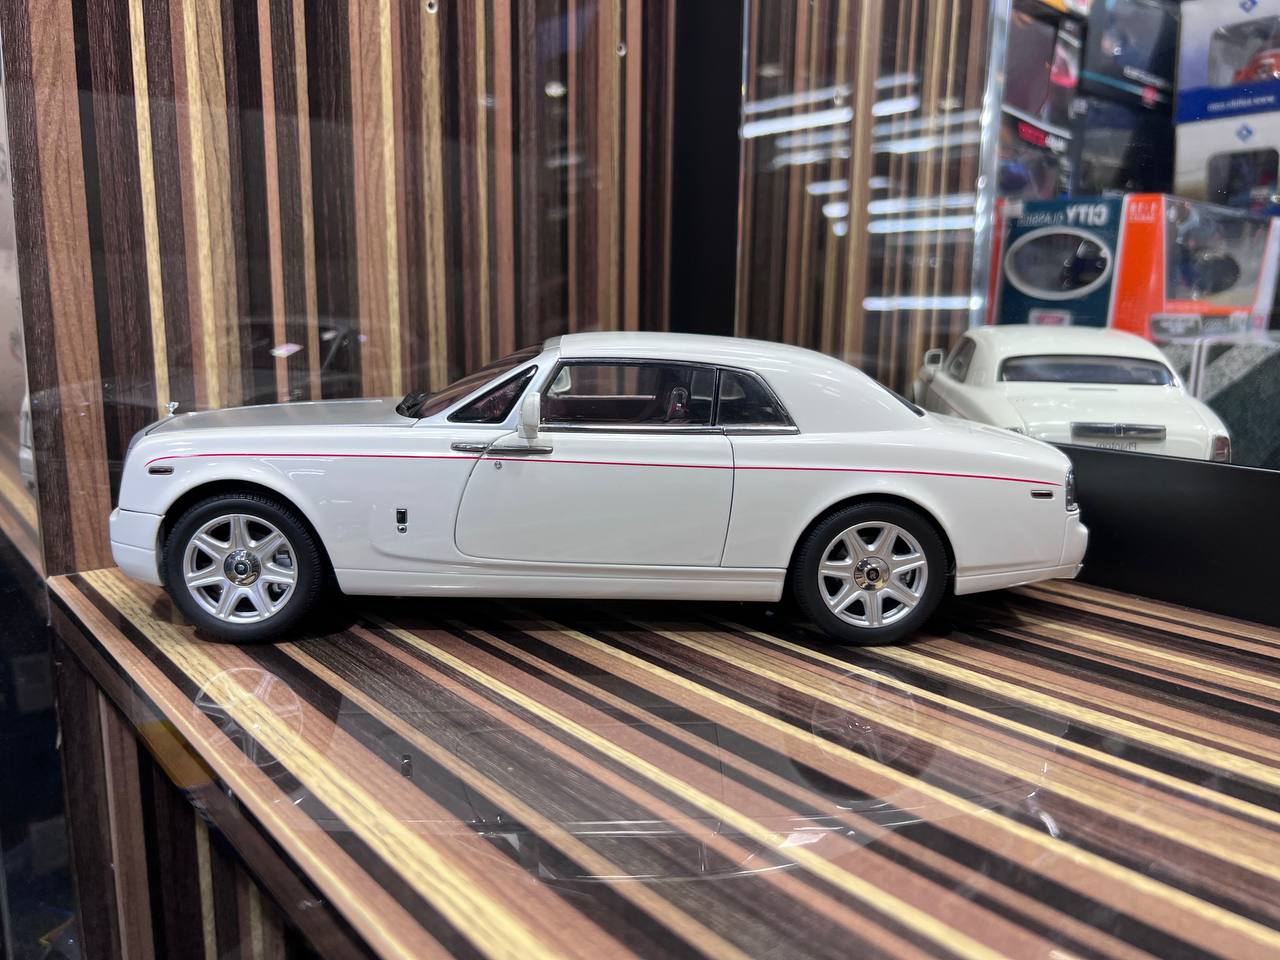 1/18 Diecast Rolls-Royce Phantom Coupe Kyosho Scale Model Car